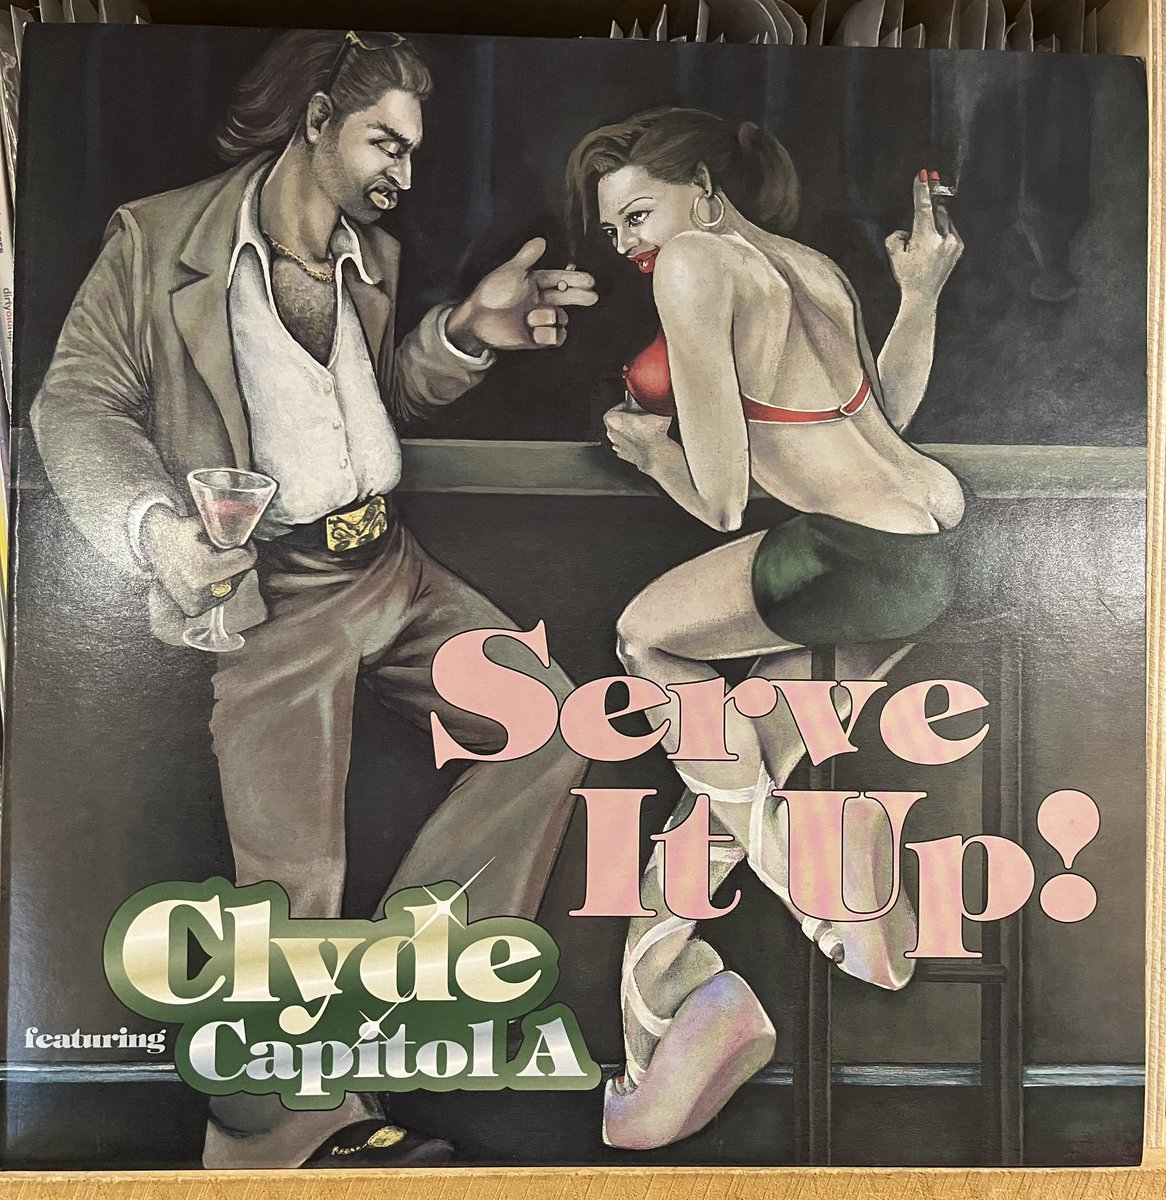 Clyde feat. Capitol A – Serve It Up! [Mantis Recordings 2003] basic-soul.co.uk #soul #electronic #bruk #brokenbeats #house #vinyl #basicsoul #radioshow #radio #podcast #leeds